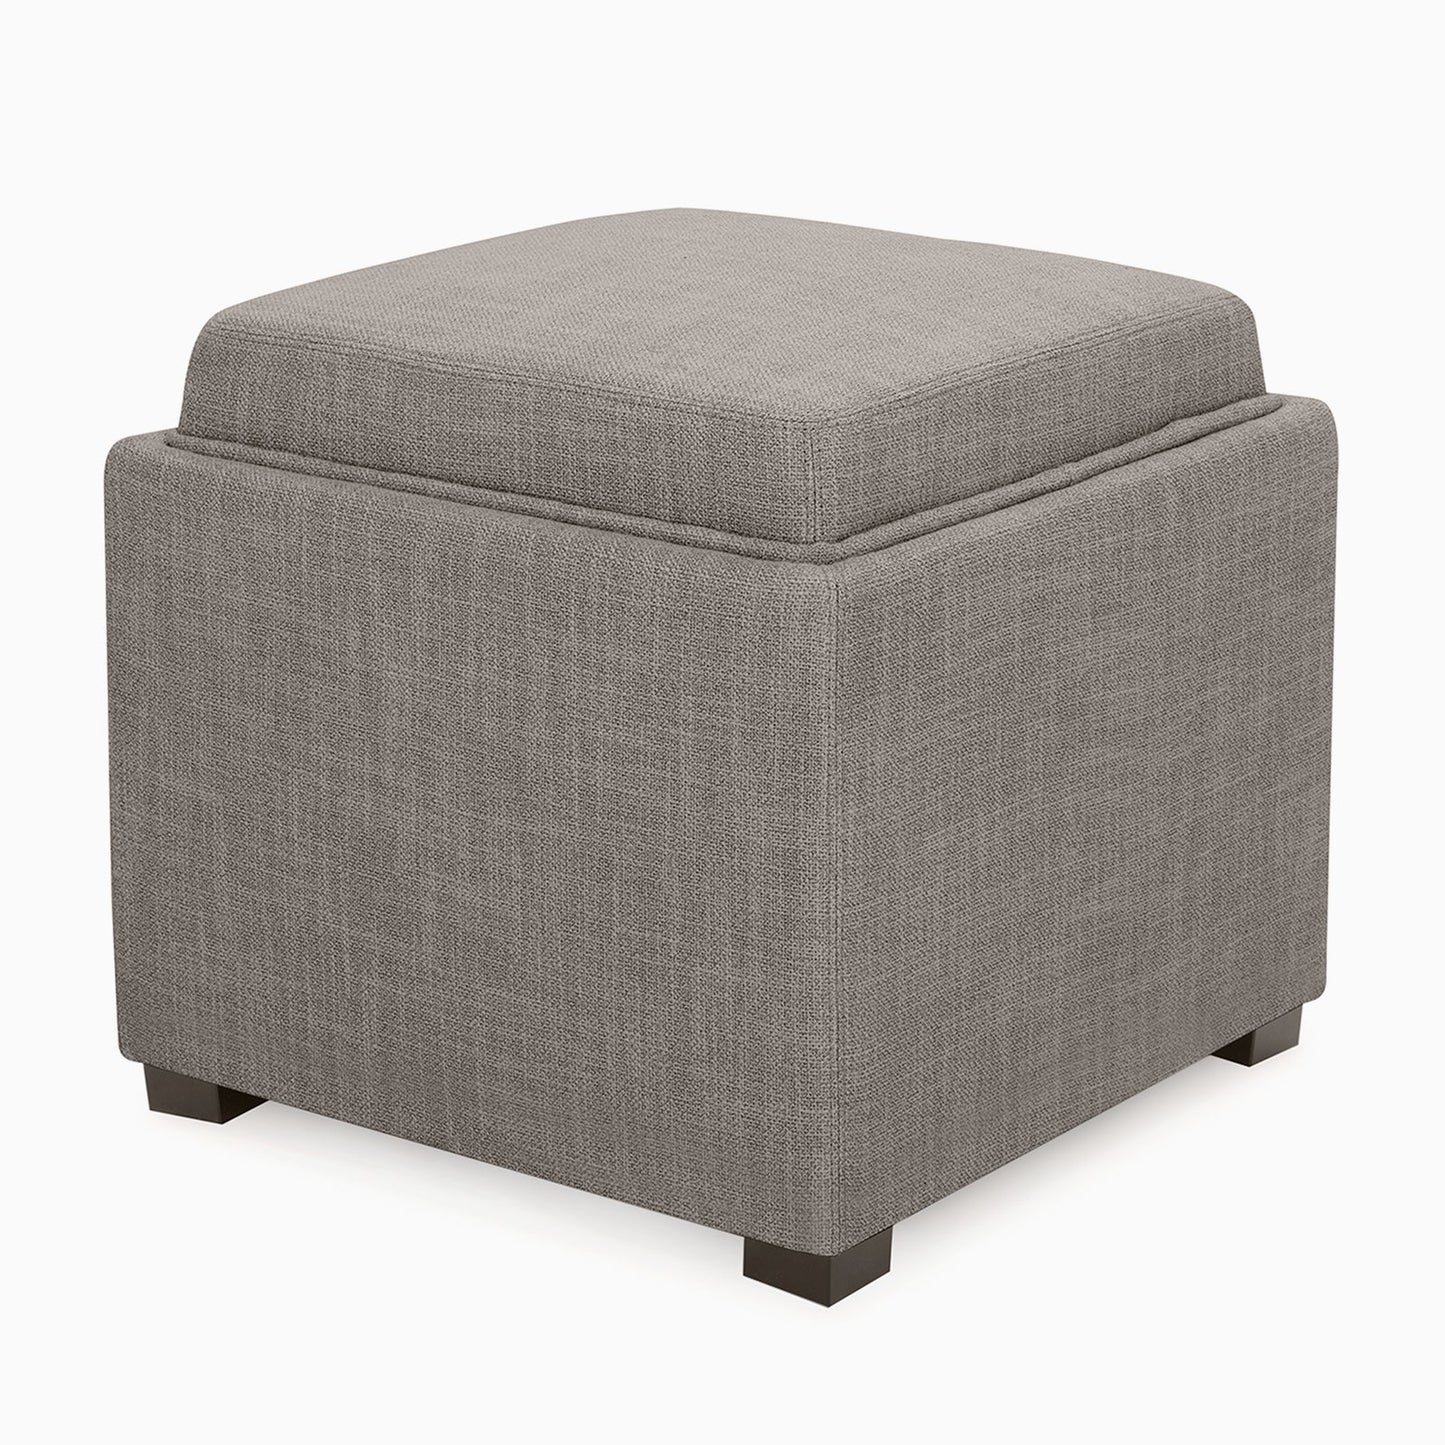 CHITA LIVING-Cube Storage Ottoman - Fabric & Leather-Ottoman-Fabric-Flint Gray-